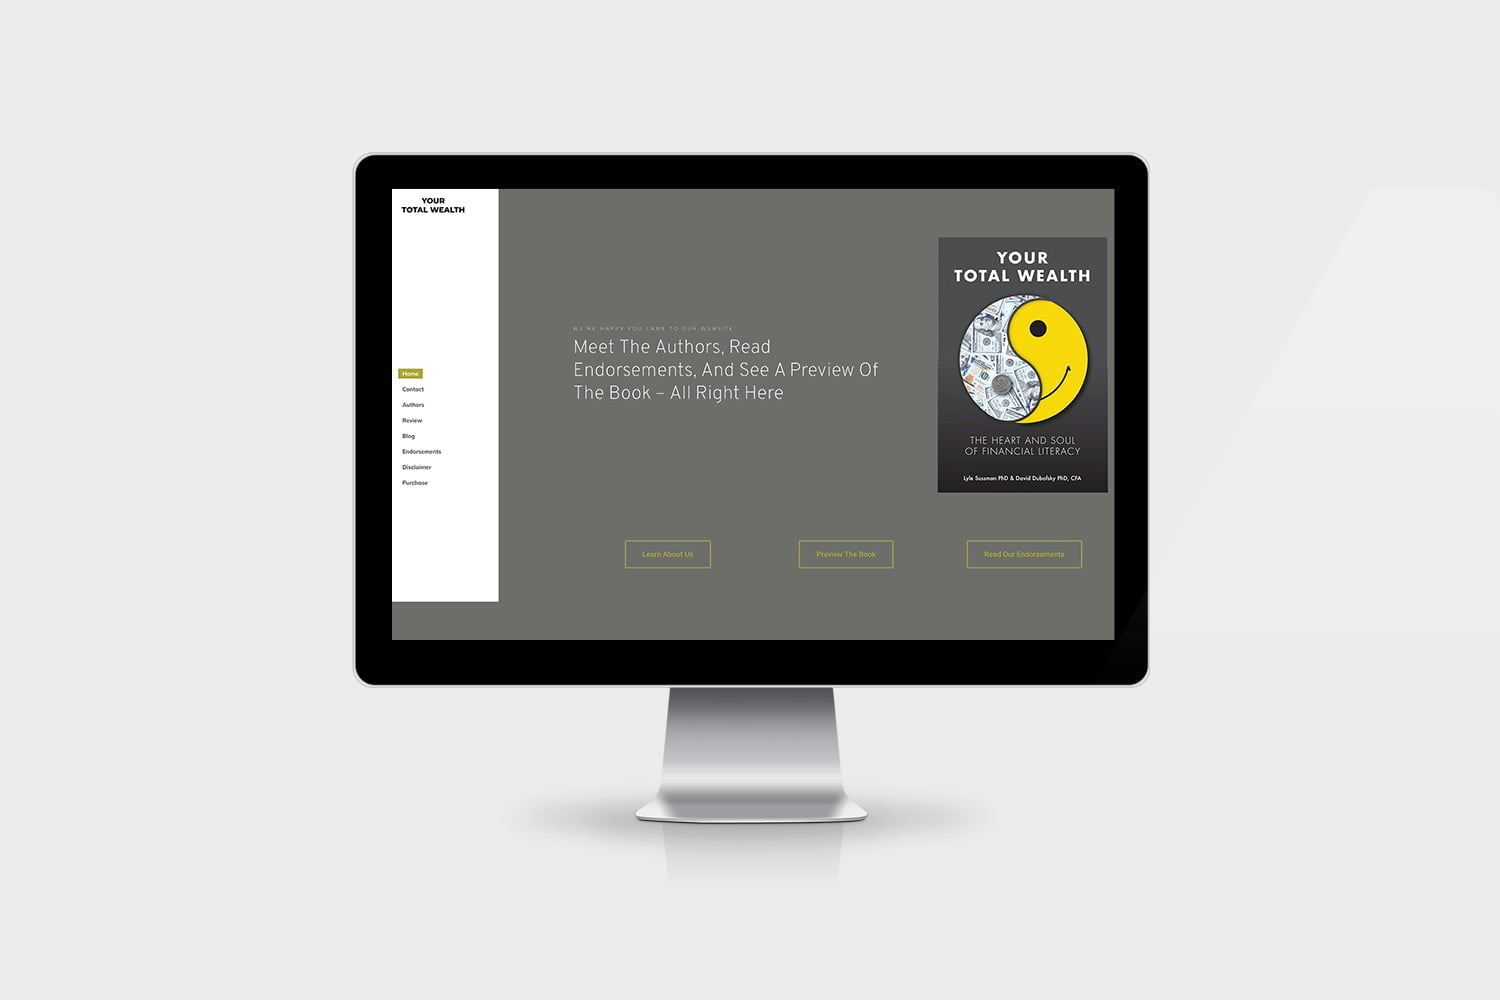 Your Total Wealth website design.